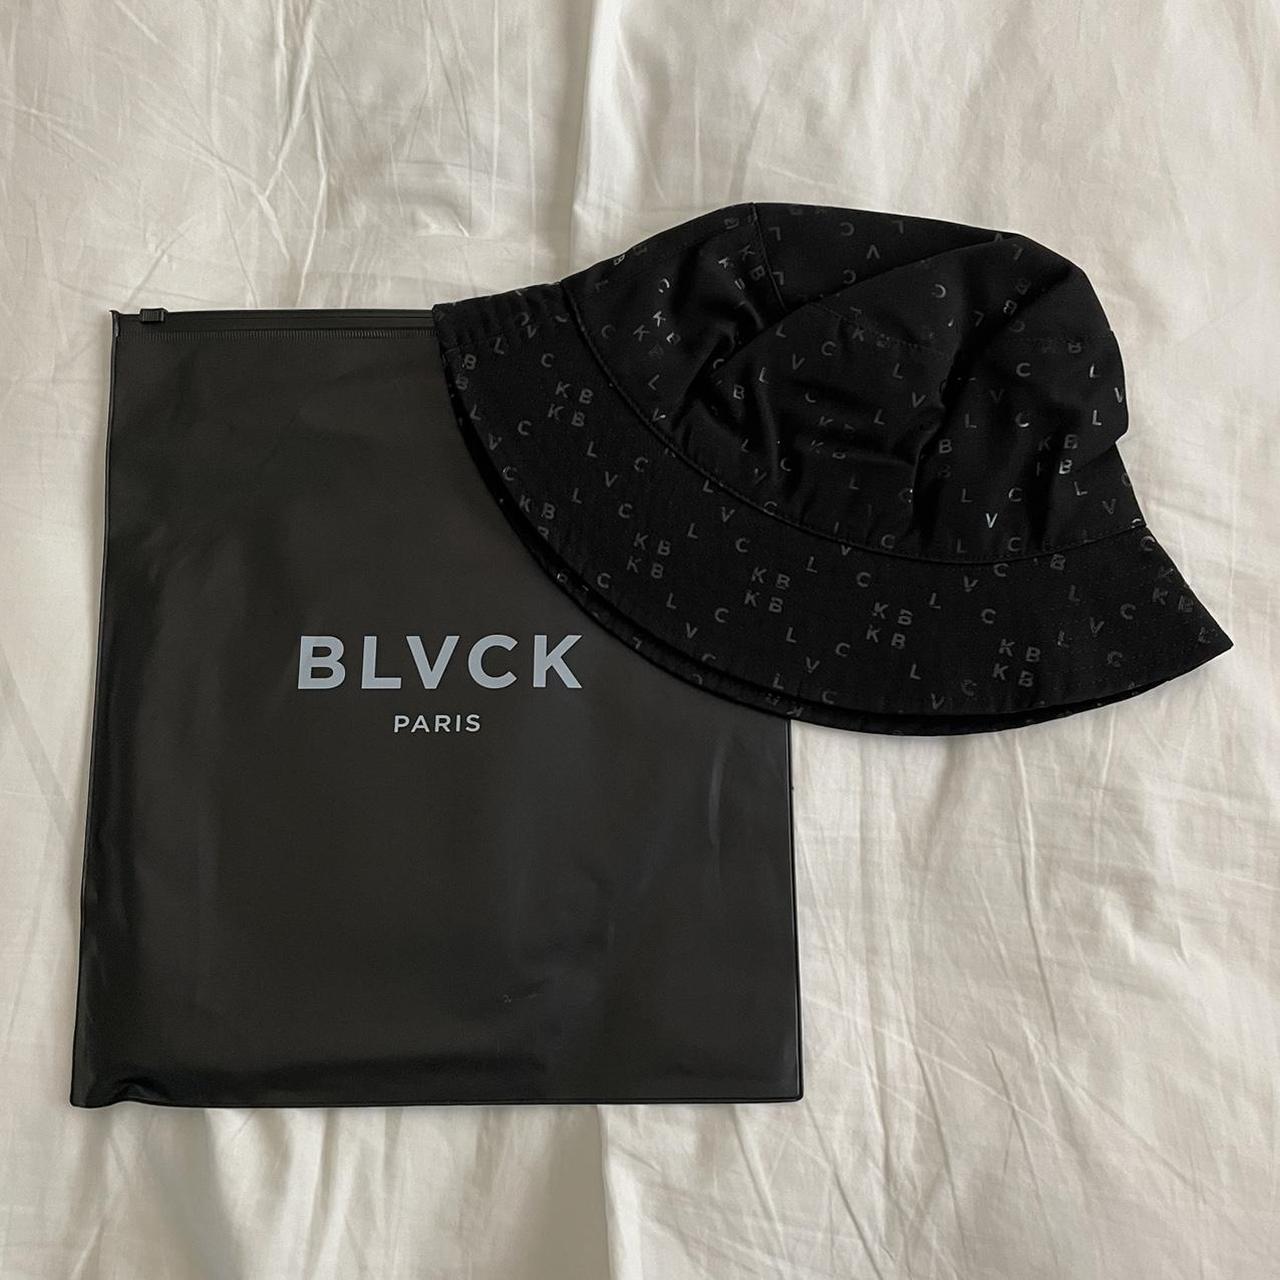 Product Image 1 - Blvck Monogram Bucket Hat
Originally $60